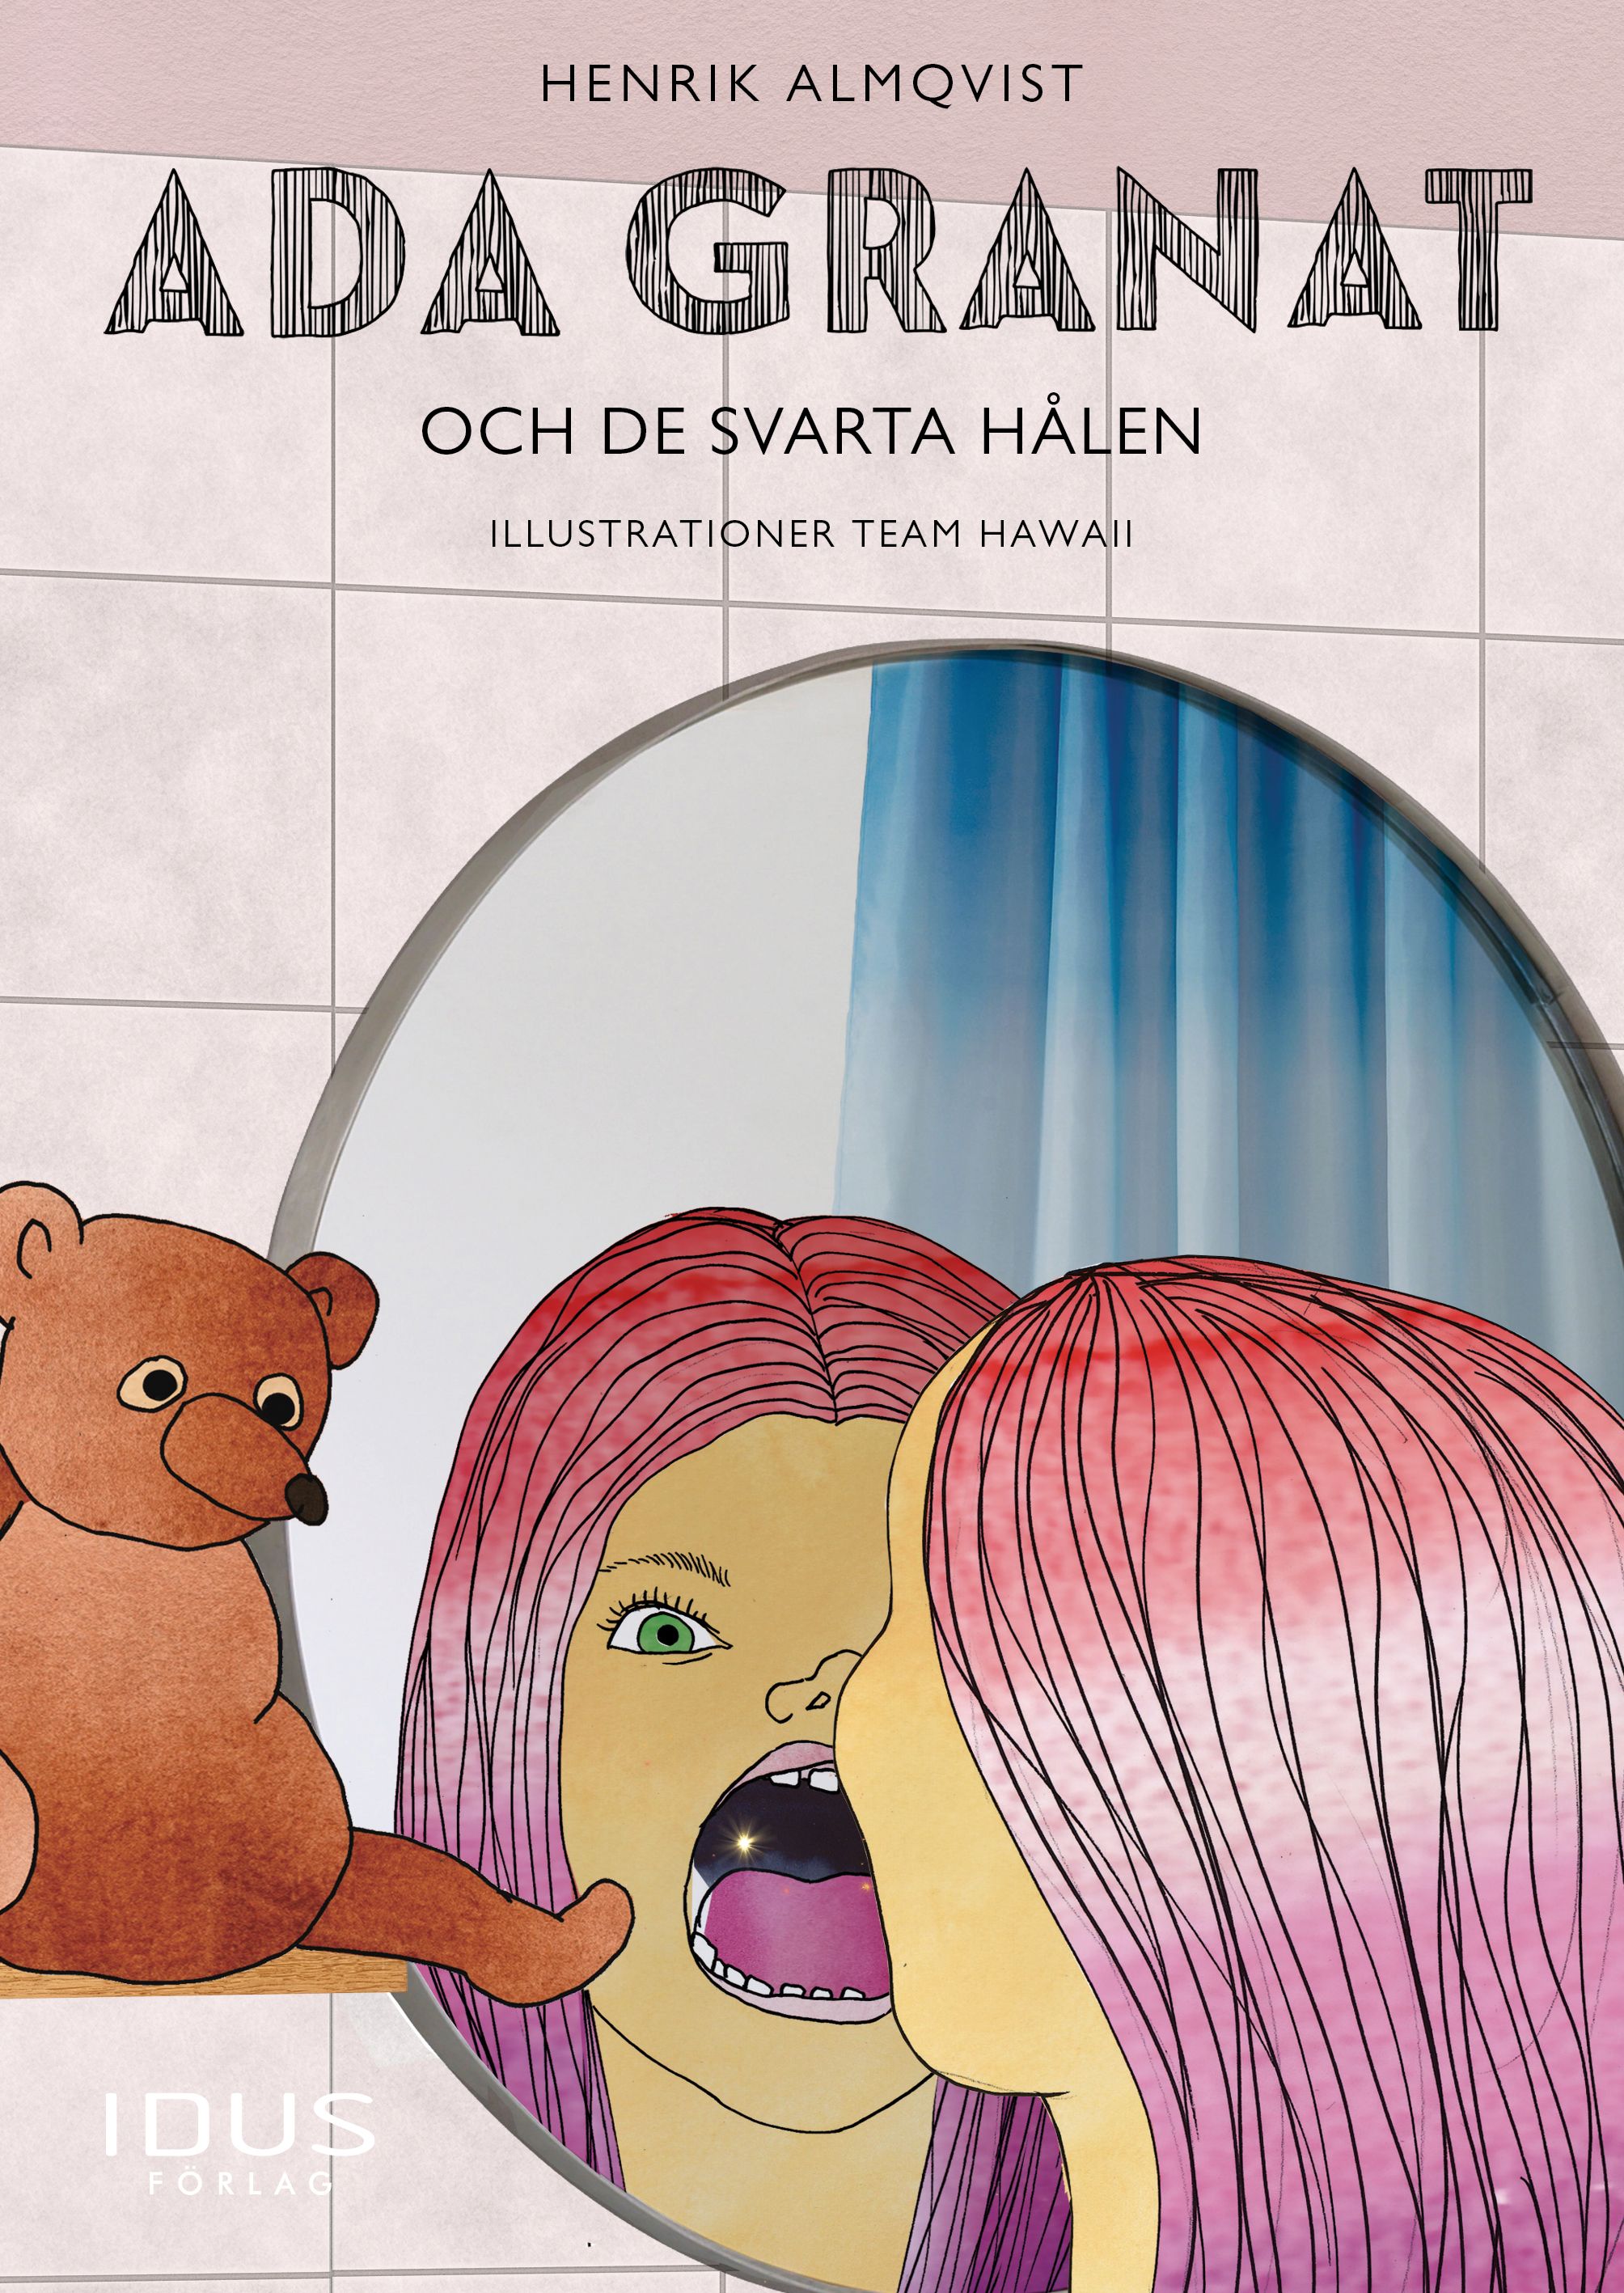 Ada Granat och de svarta hålen, eBook by Henrik Almqvist